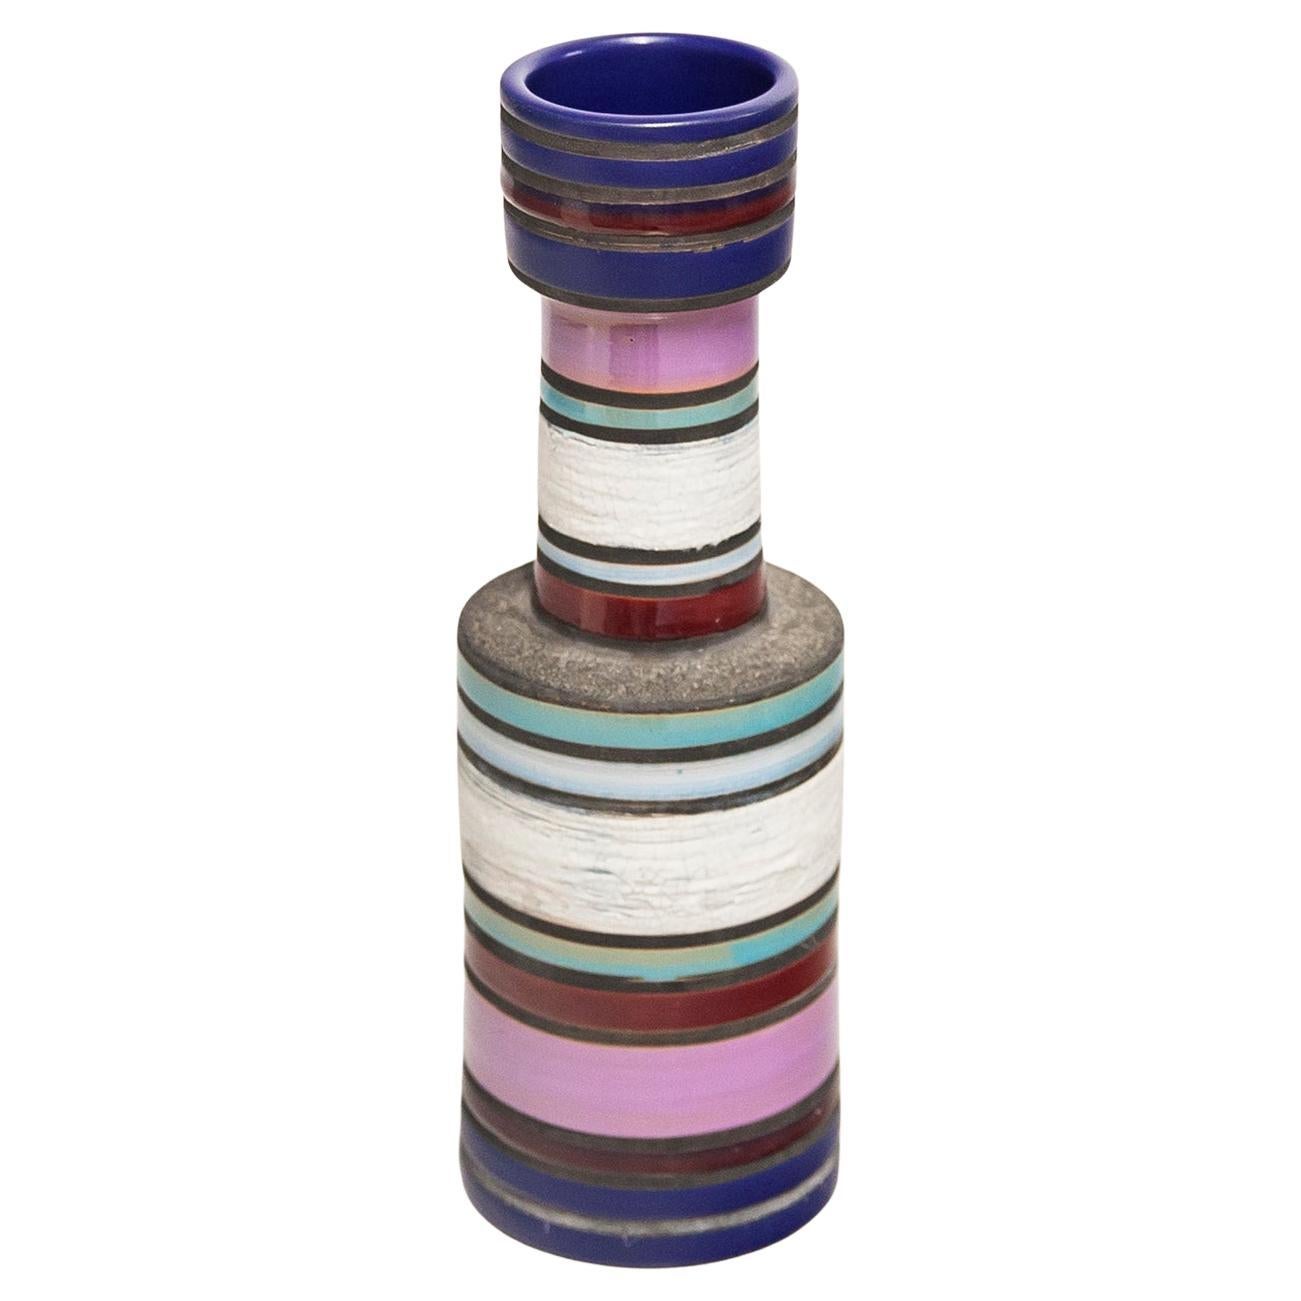 Aldo Londi Bitossi Raymor Ceramic Vase Pink Stripes Signed Italy 1960s